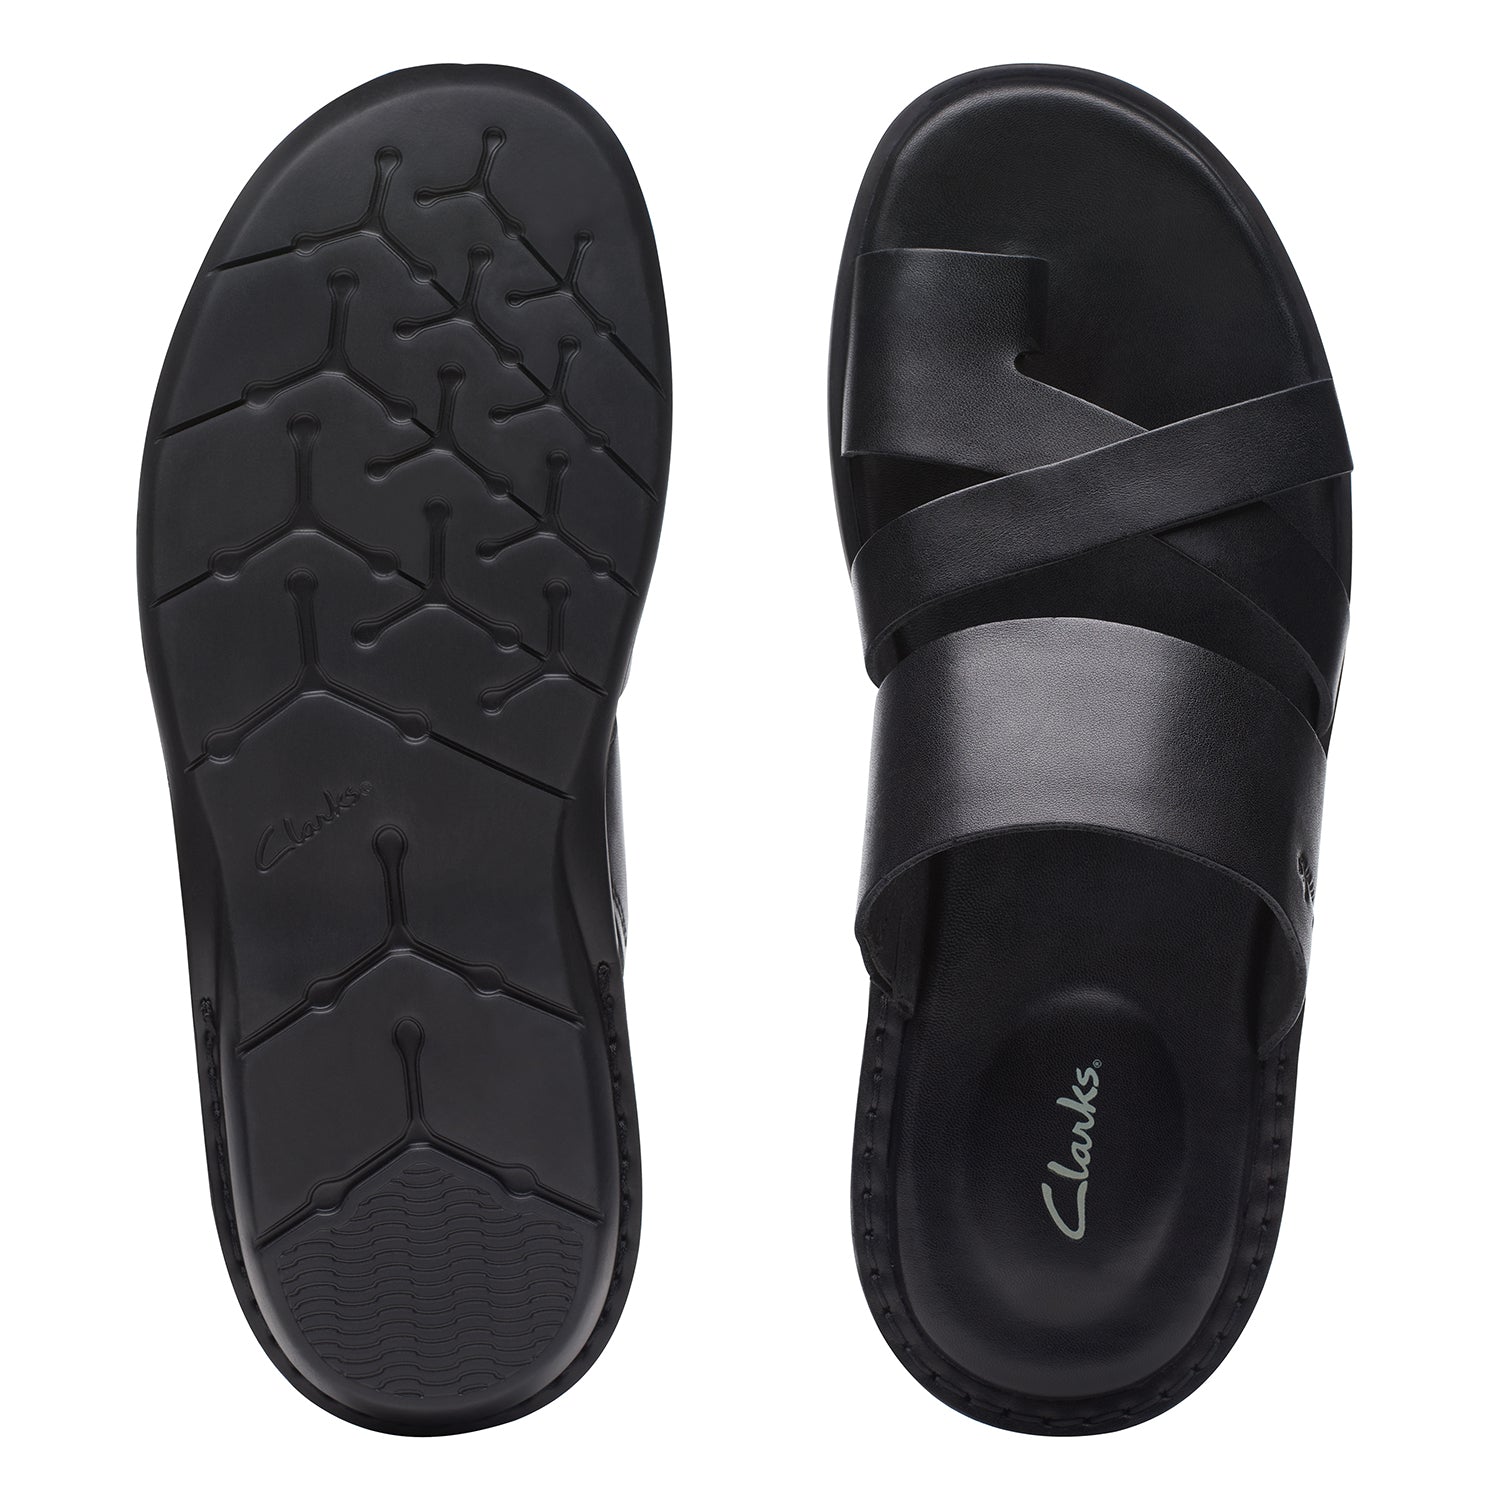 Clarks Penryn Loop Sandals - Black Leather - 261745877 - G Width (Standard Fit)